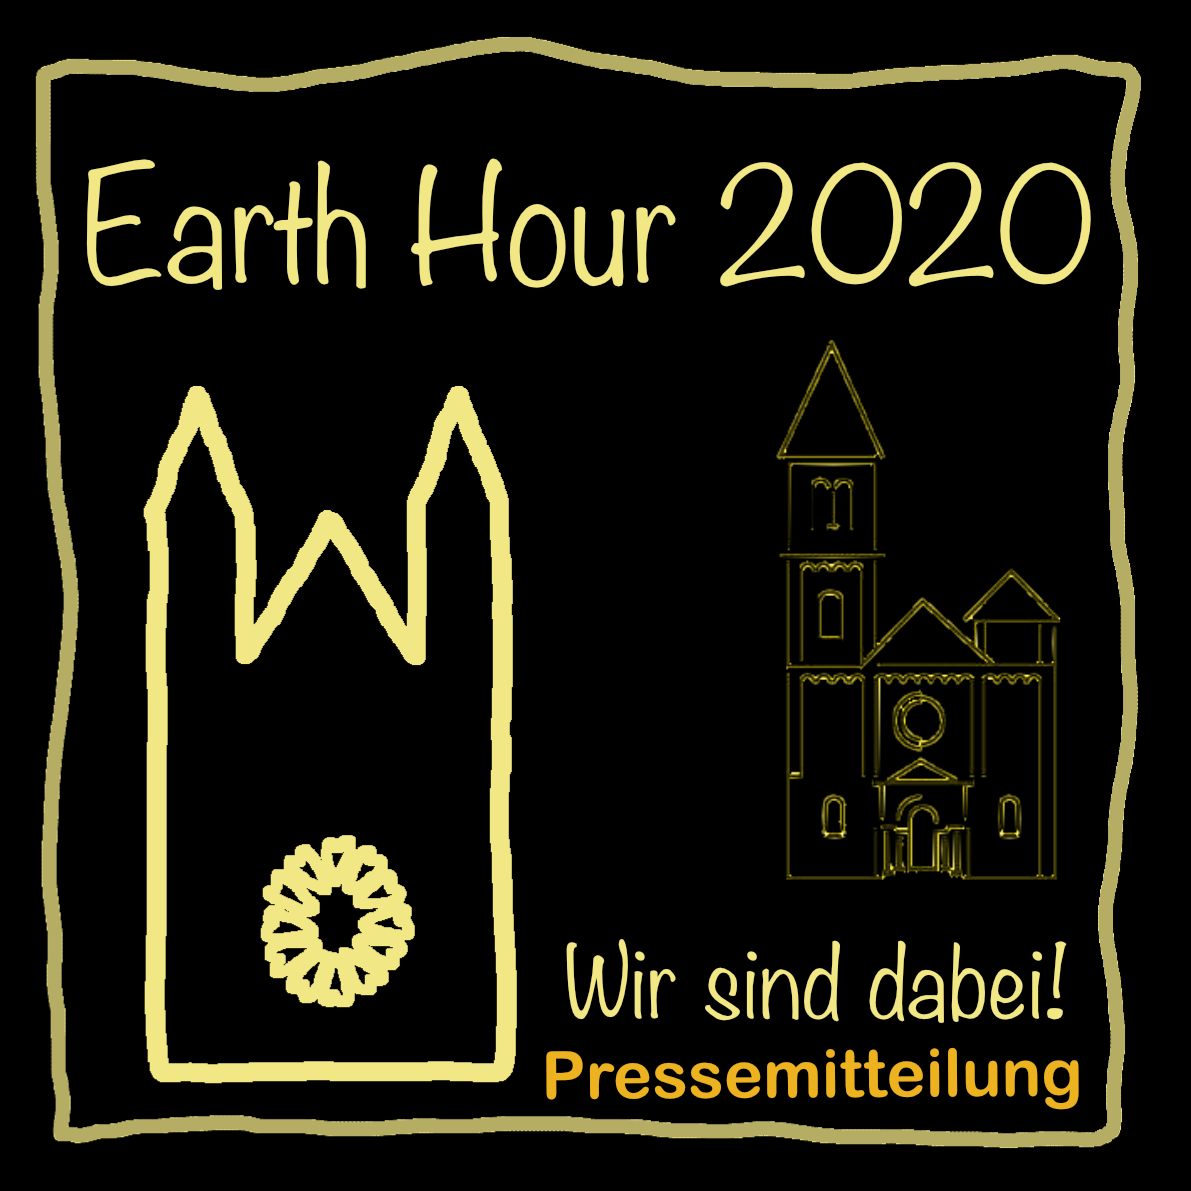 Earth Hour 2020 (c) Martina Bauer